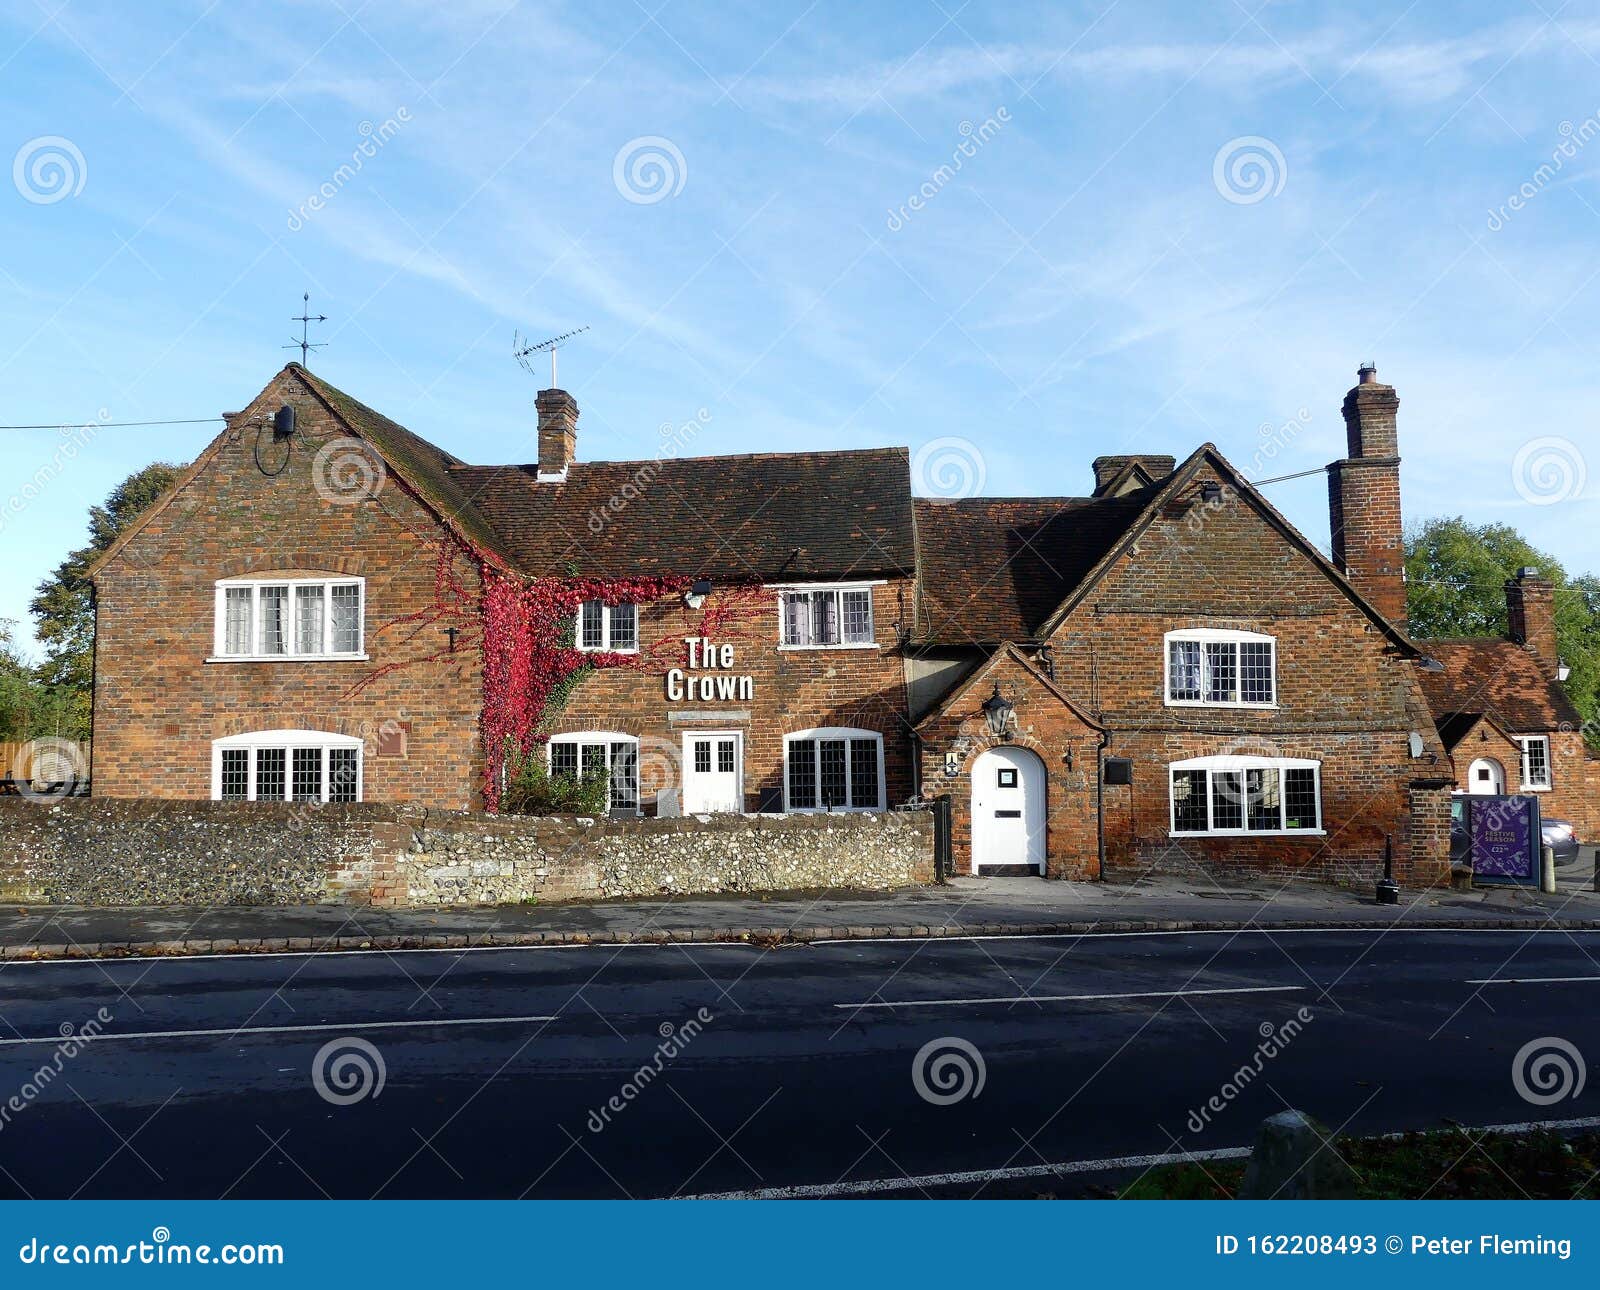 https://thumbs.dreamstime.com/z/crown-inn-church-road-penn-buckinghamshire-stunning-grade-ii-listed-th-century-english-pub-restaurant-photo-was-taken-162208493.jpg